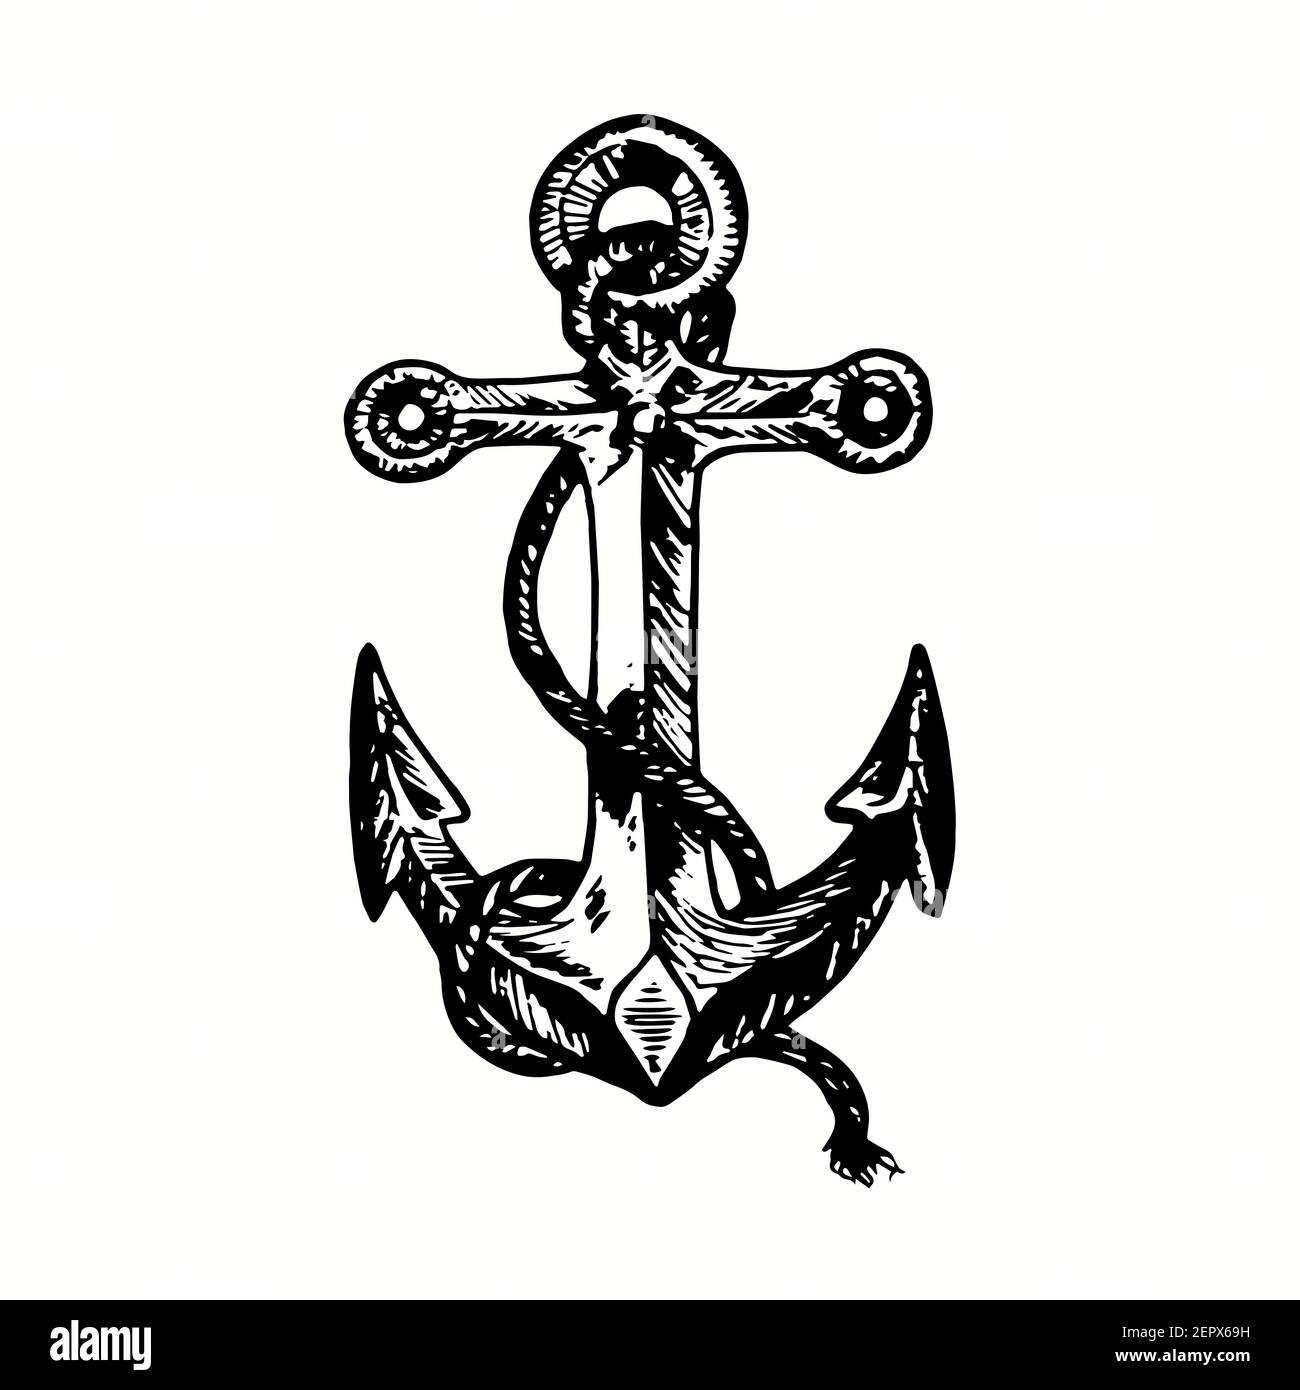 black anchor drawing